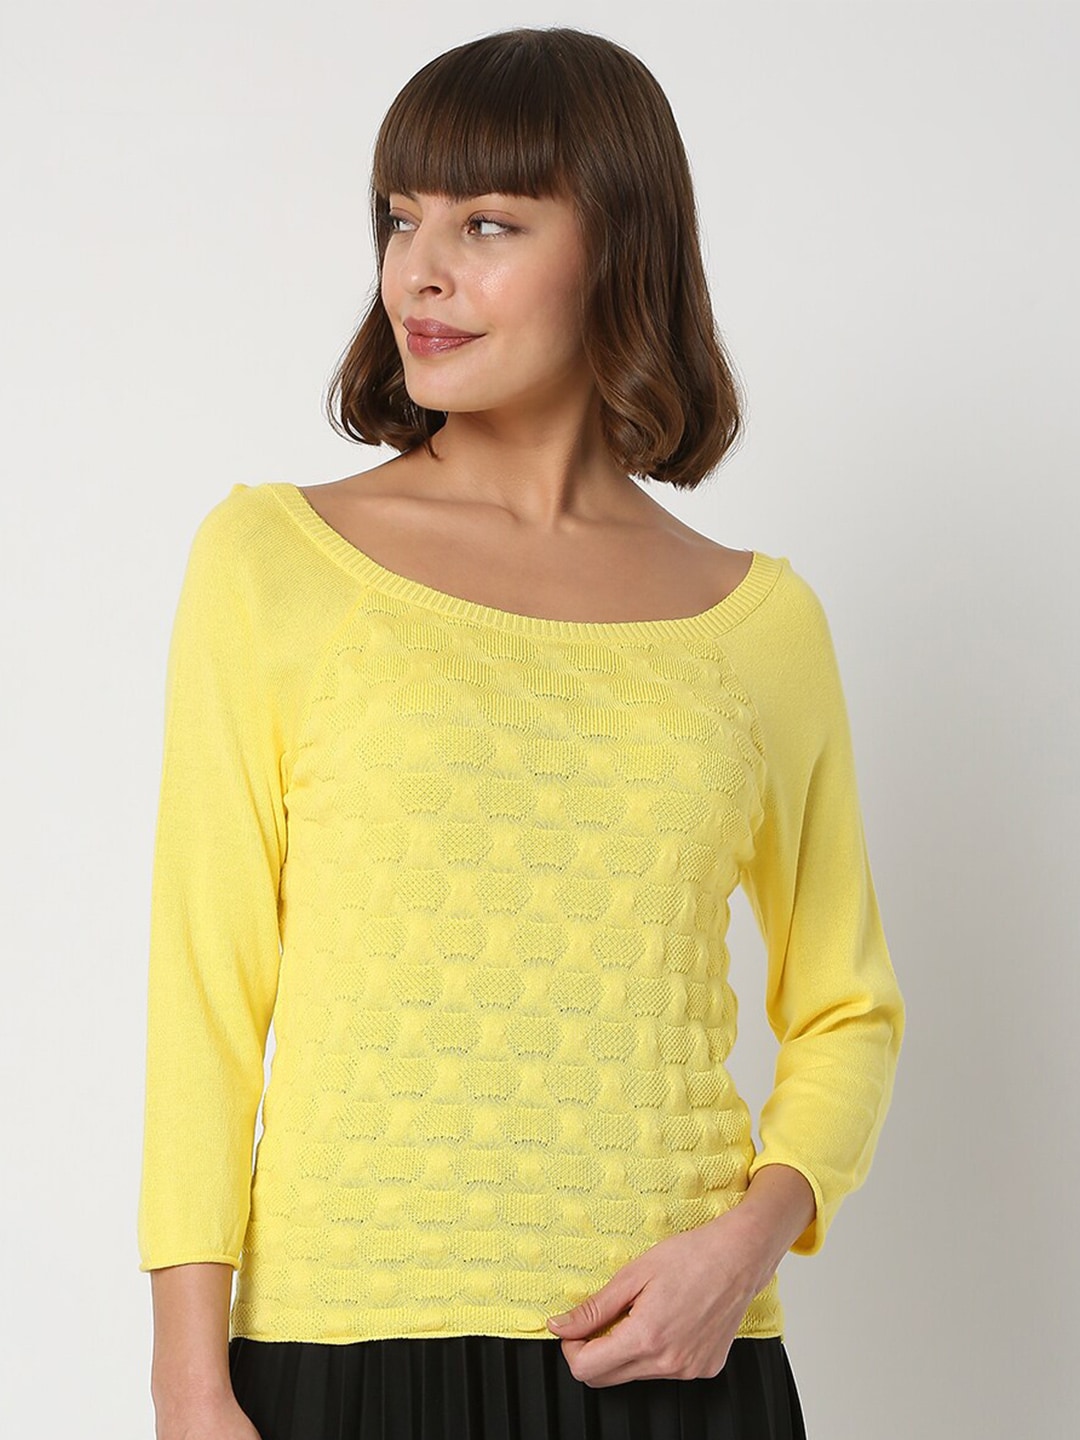 Vero Moda Women Yellow Printed Pullover Price in India